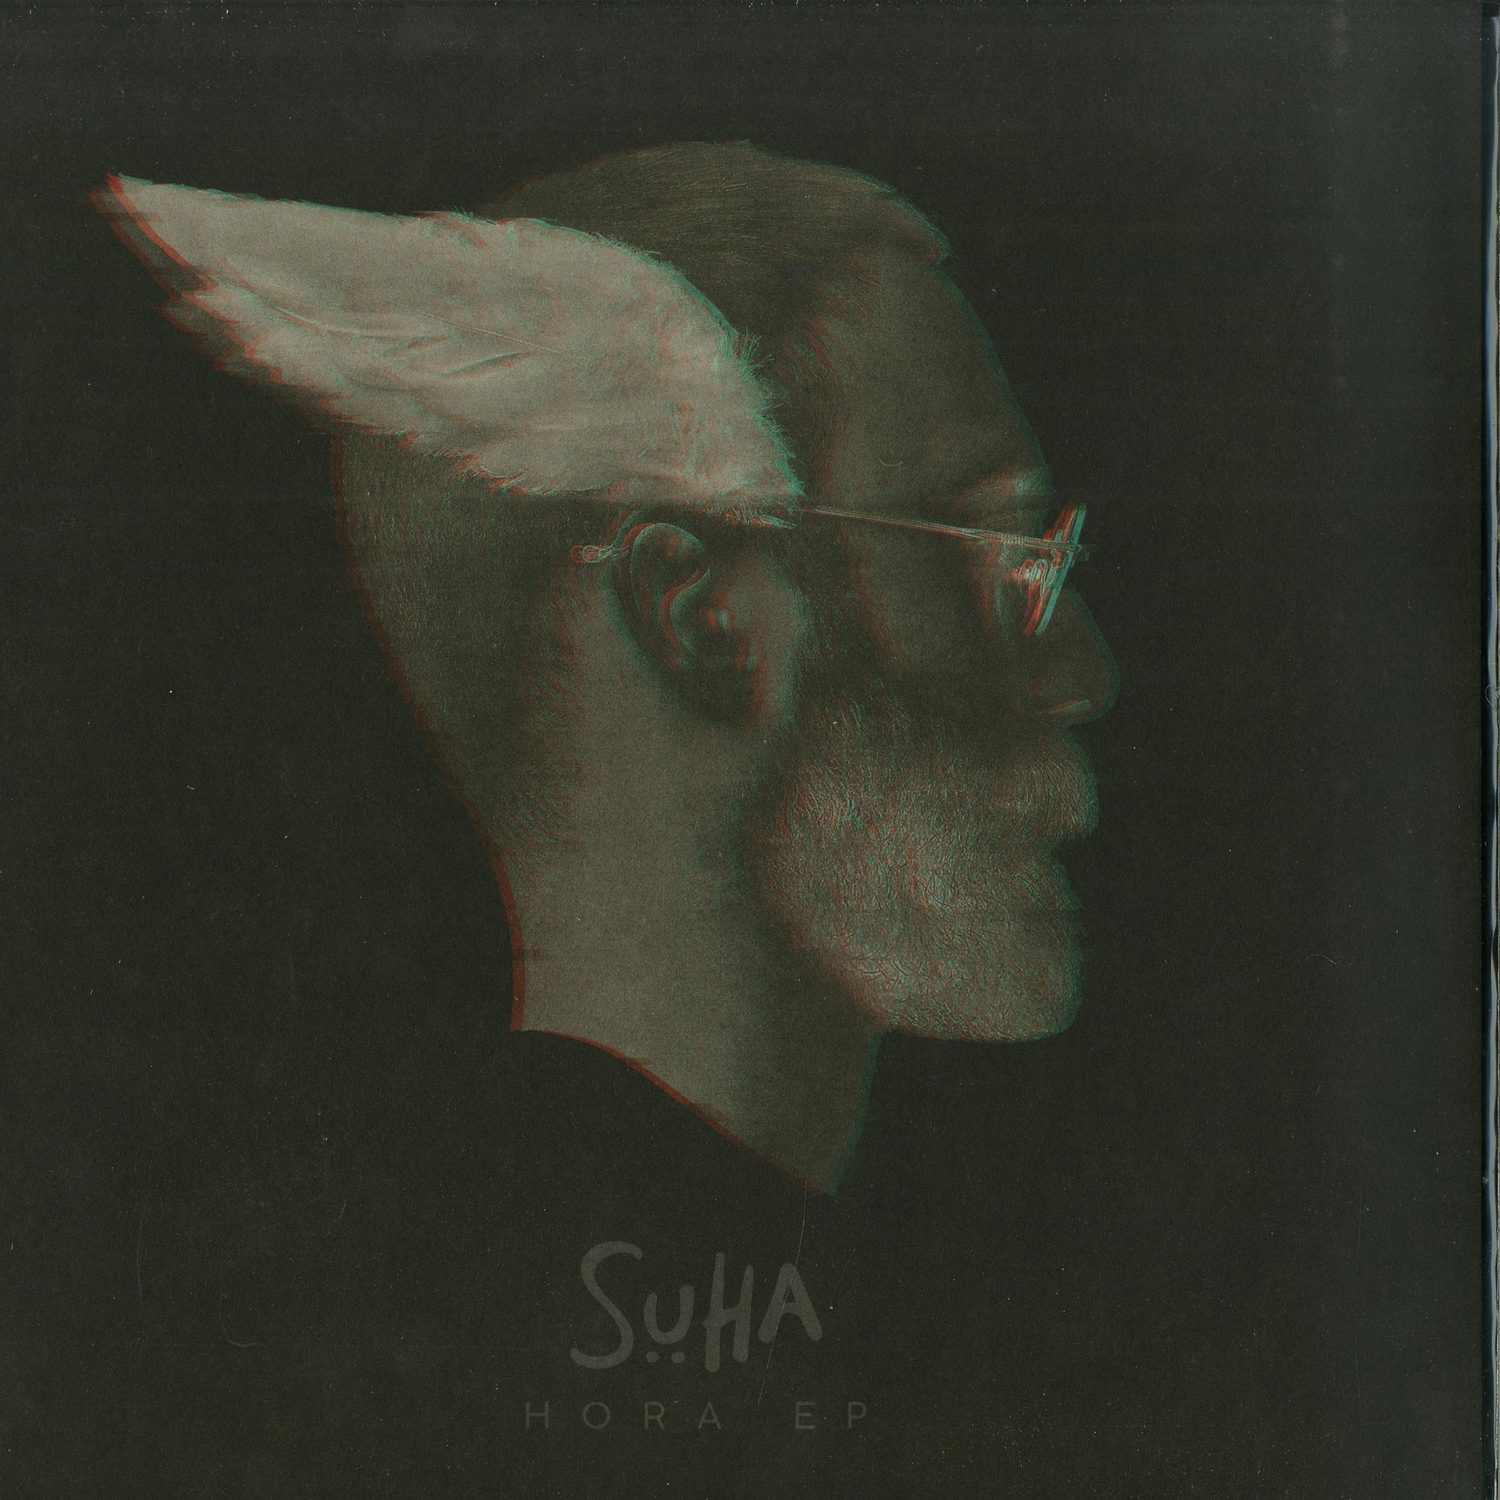 Suha - HORA EP